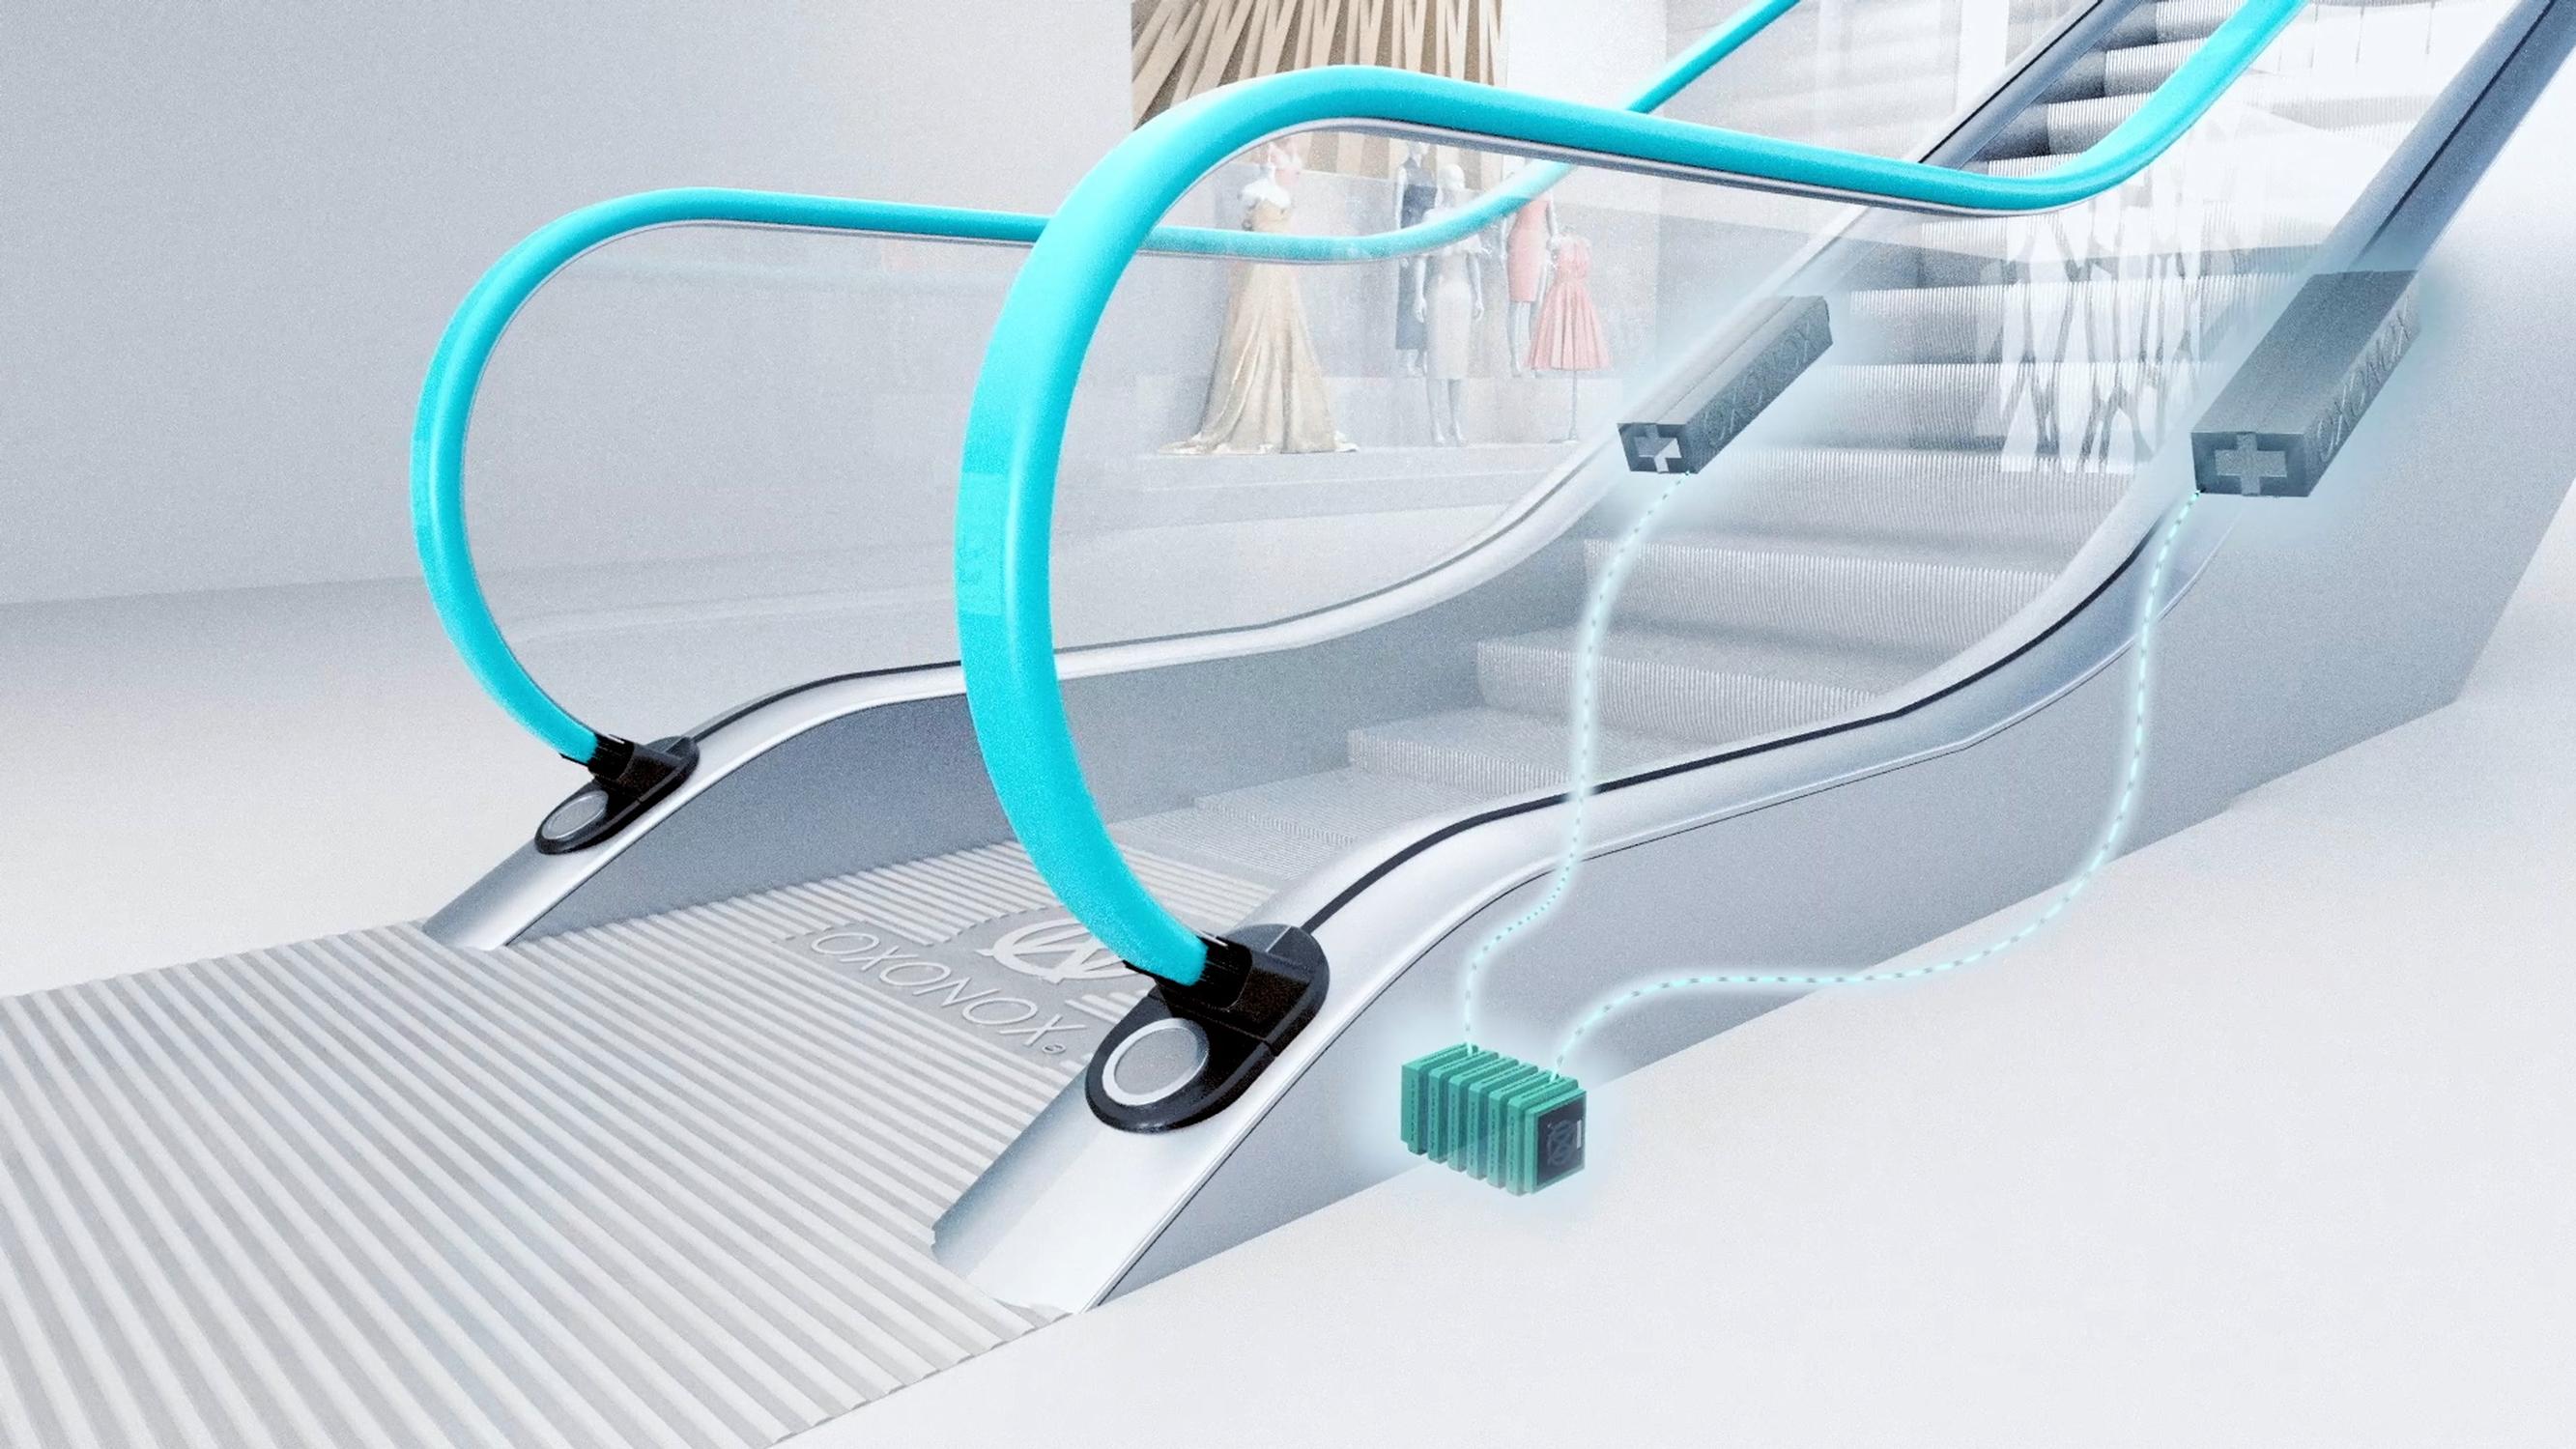 The Oxonox escalator sanitising system